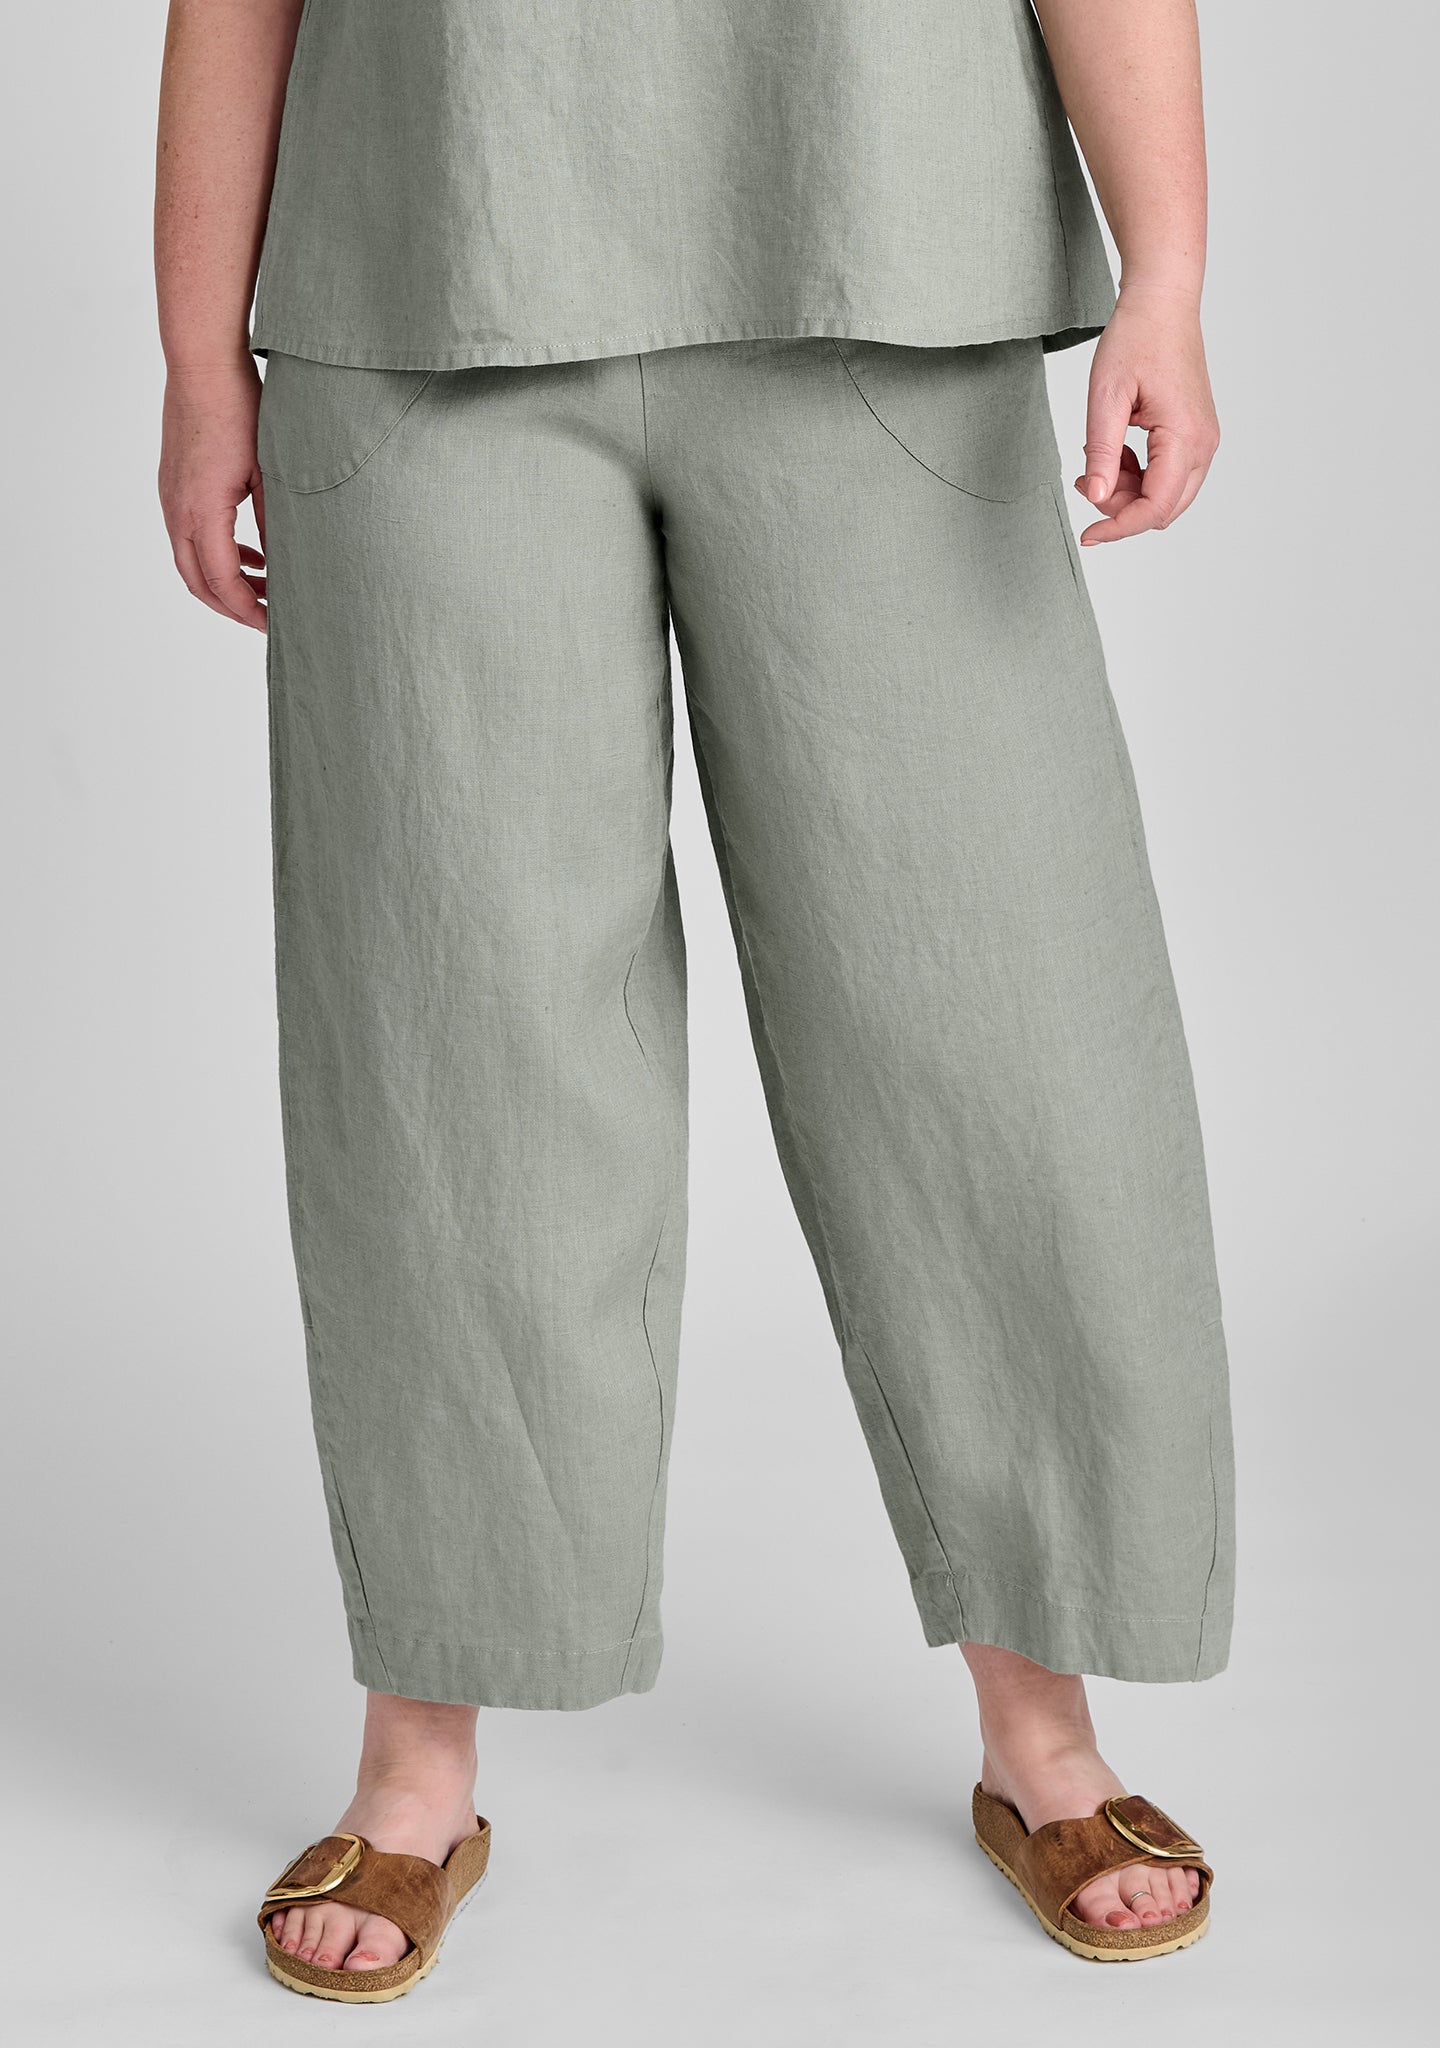 Wide Leg Linen Pants for Women, Loose Linen Pants, Palazzo Pants, White Linen  Trouser Women, Linen Clothing, High Waisted Pants -  Canada